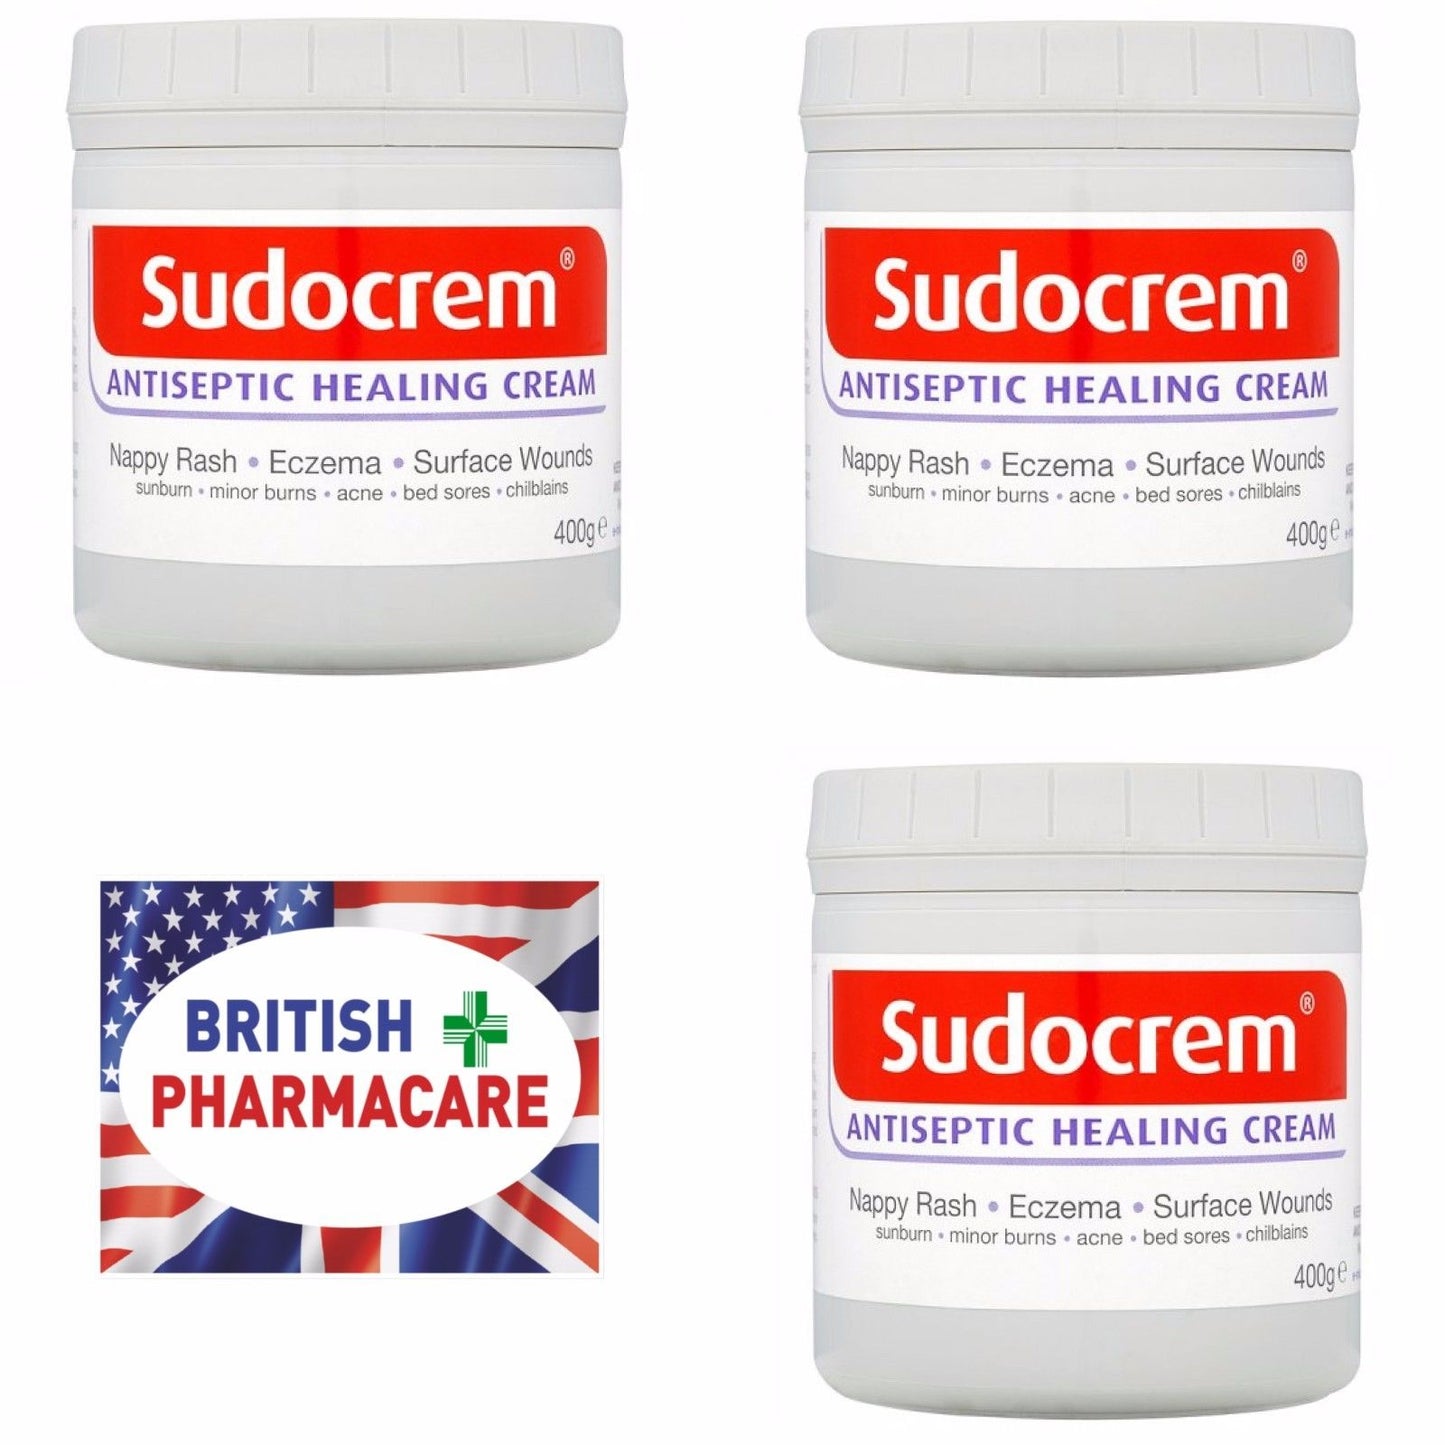 Sudocrem Antiseptic Healing Cream 400g x3 (1200g total)